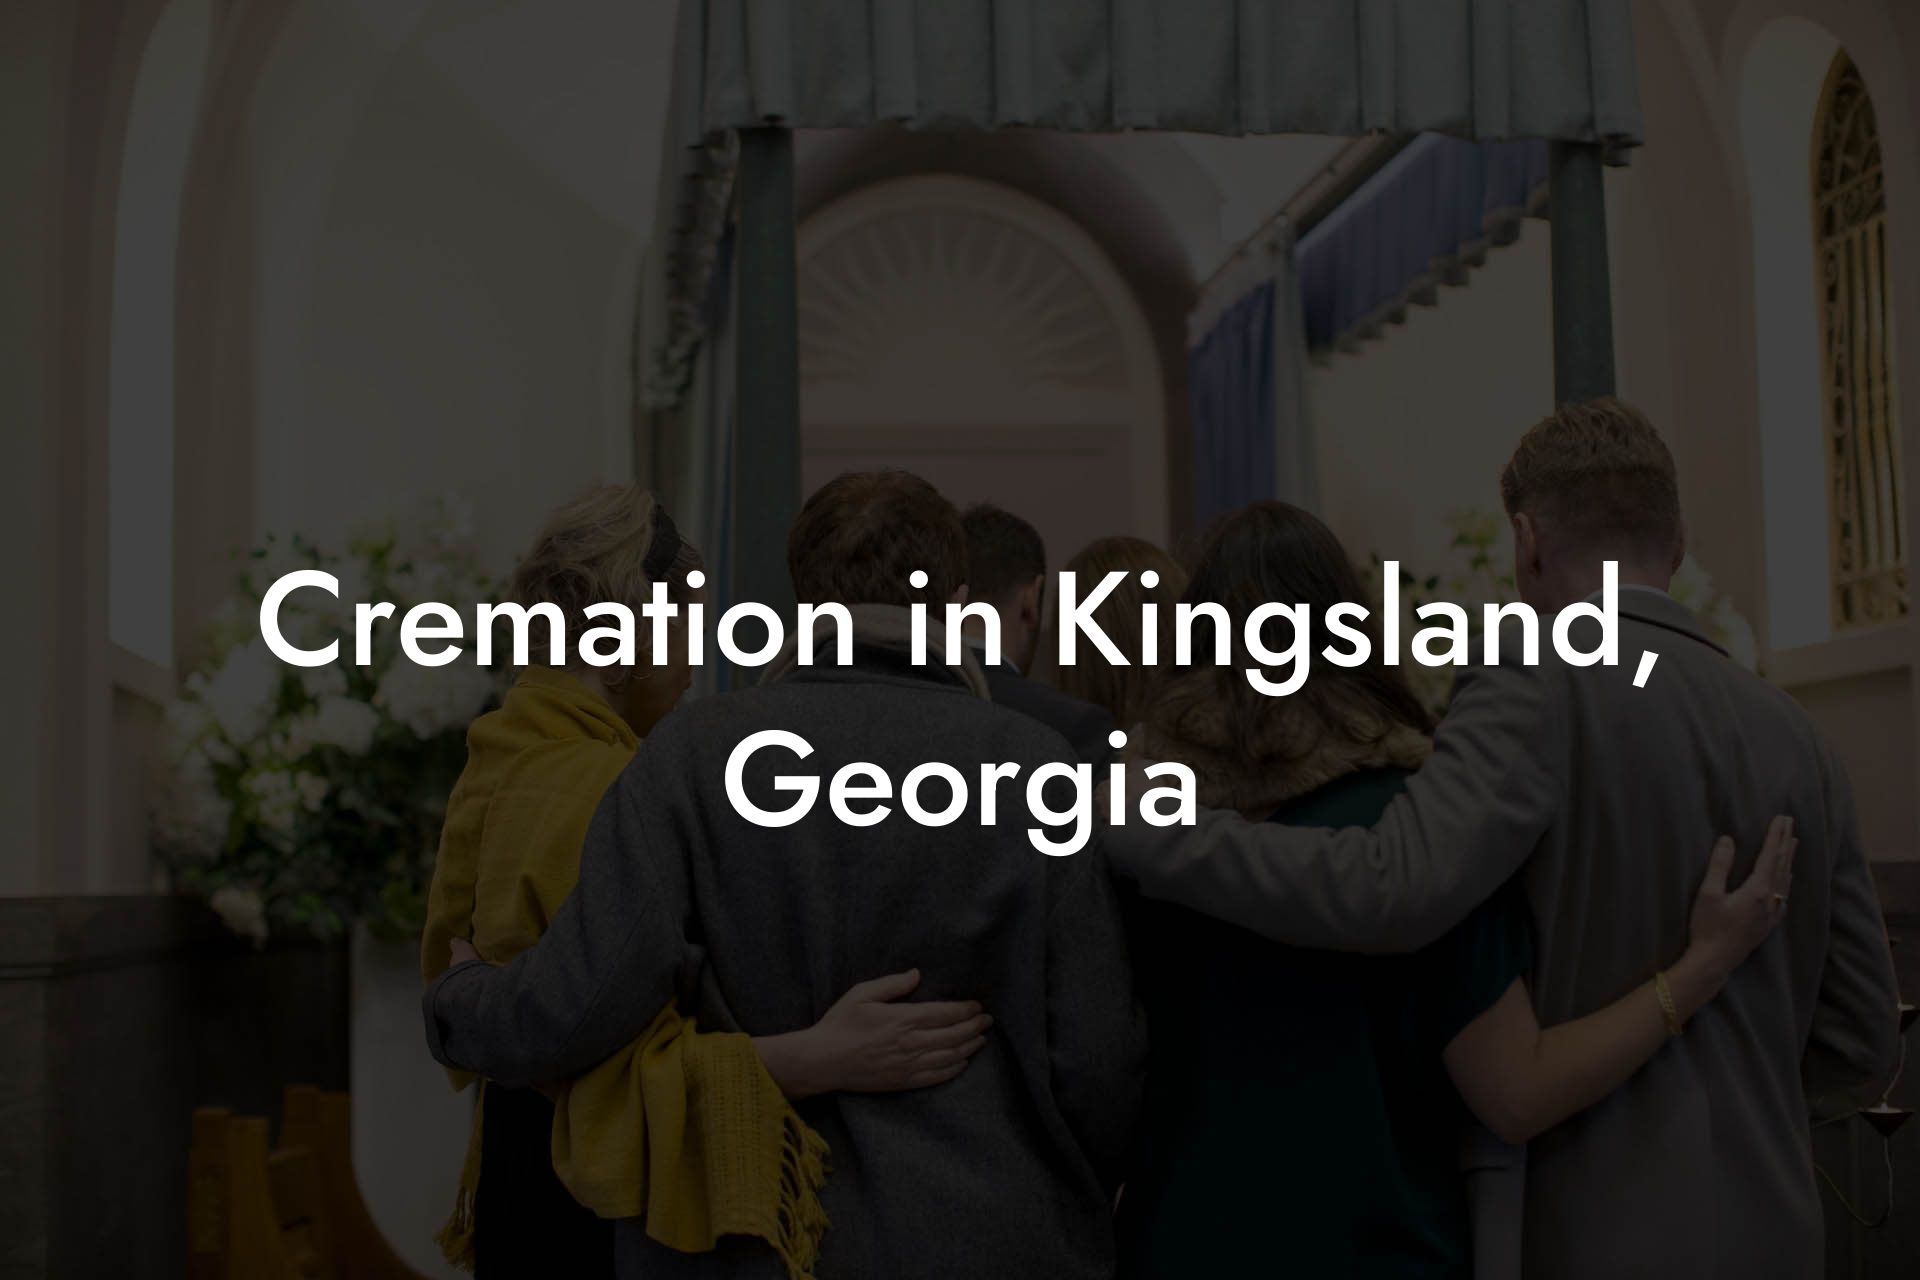 Cremation in Kingsland, Georgia